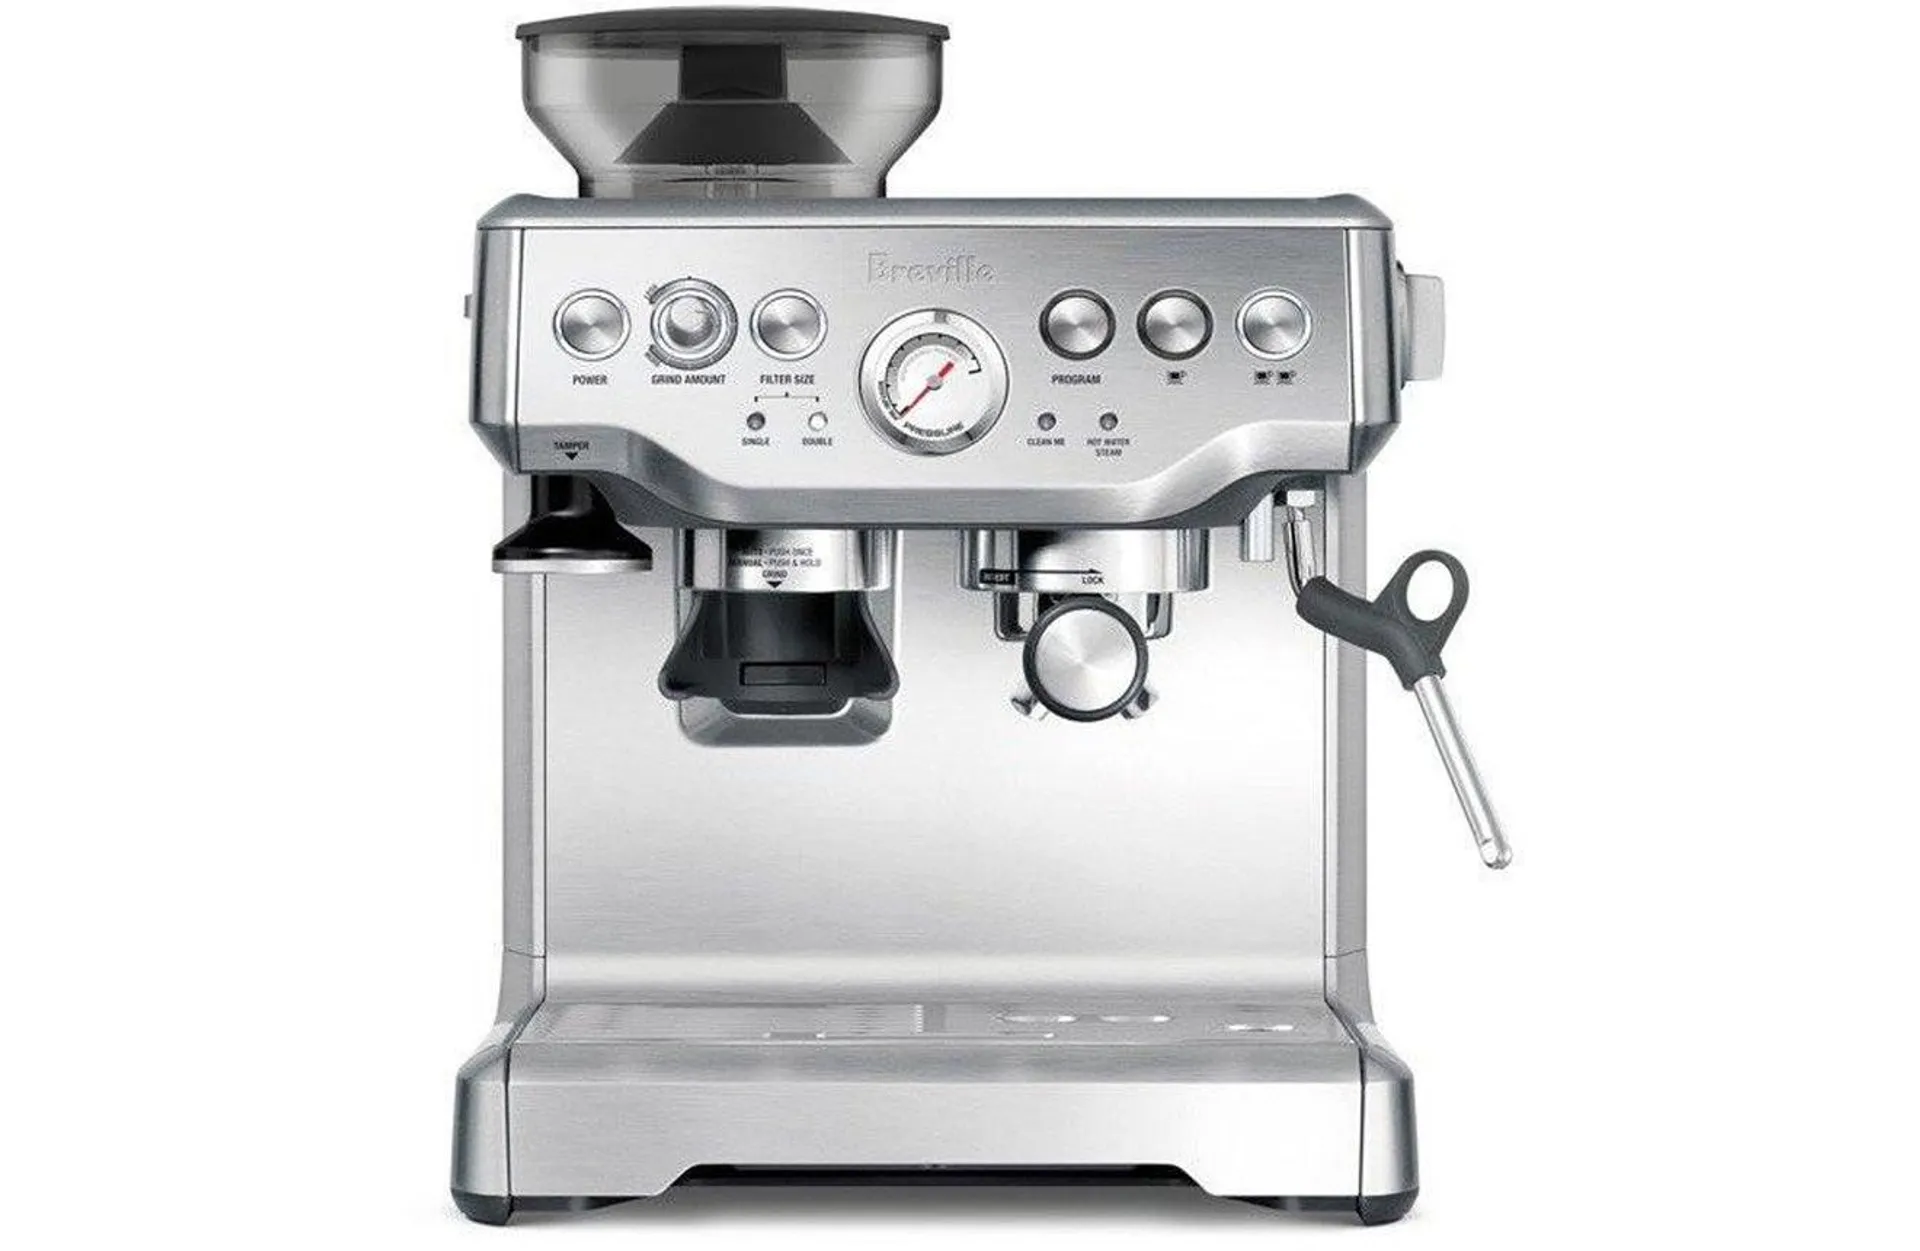 Breville Barista Express Espresso Machine - BES870BSS